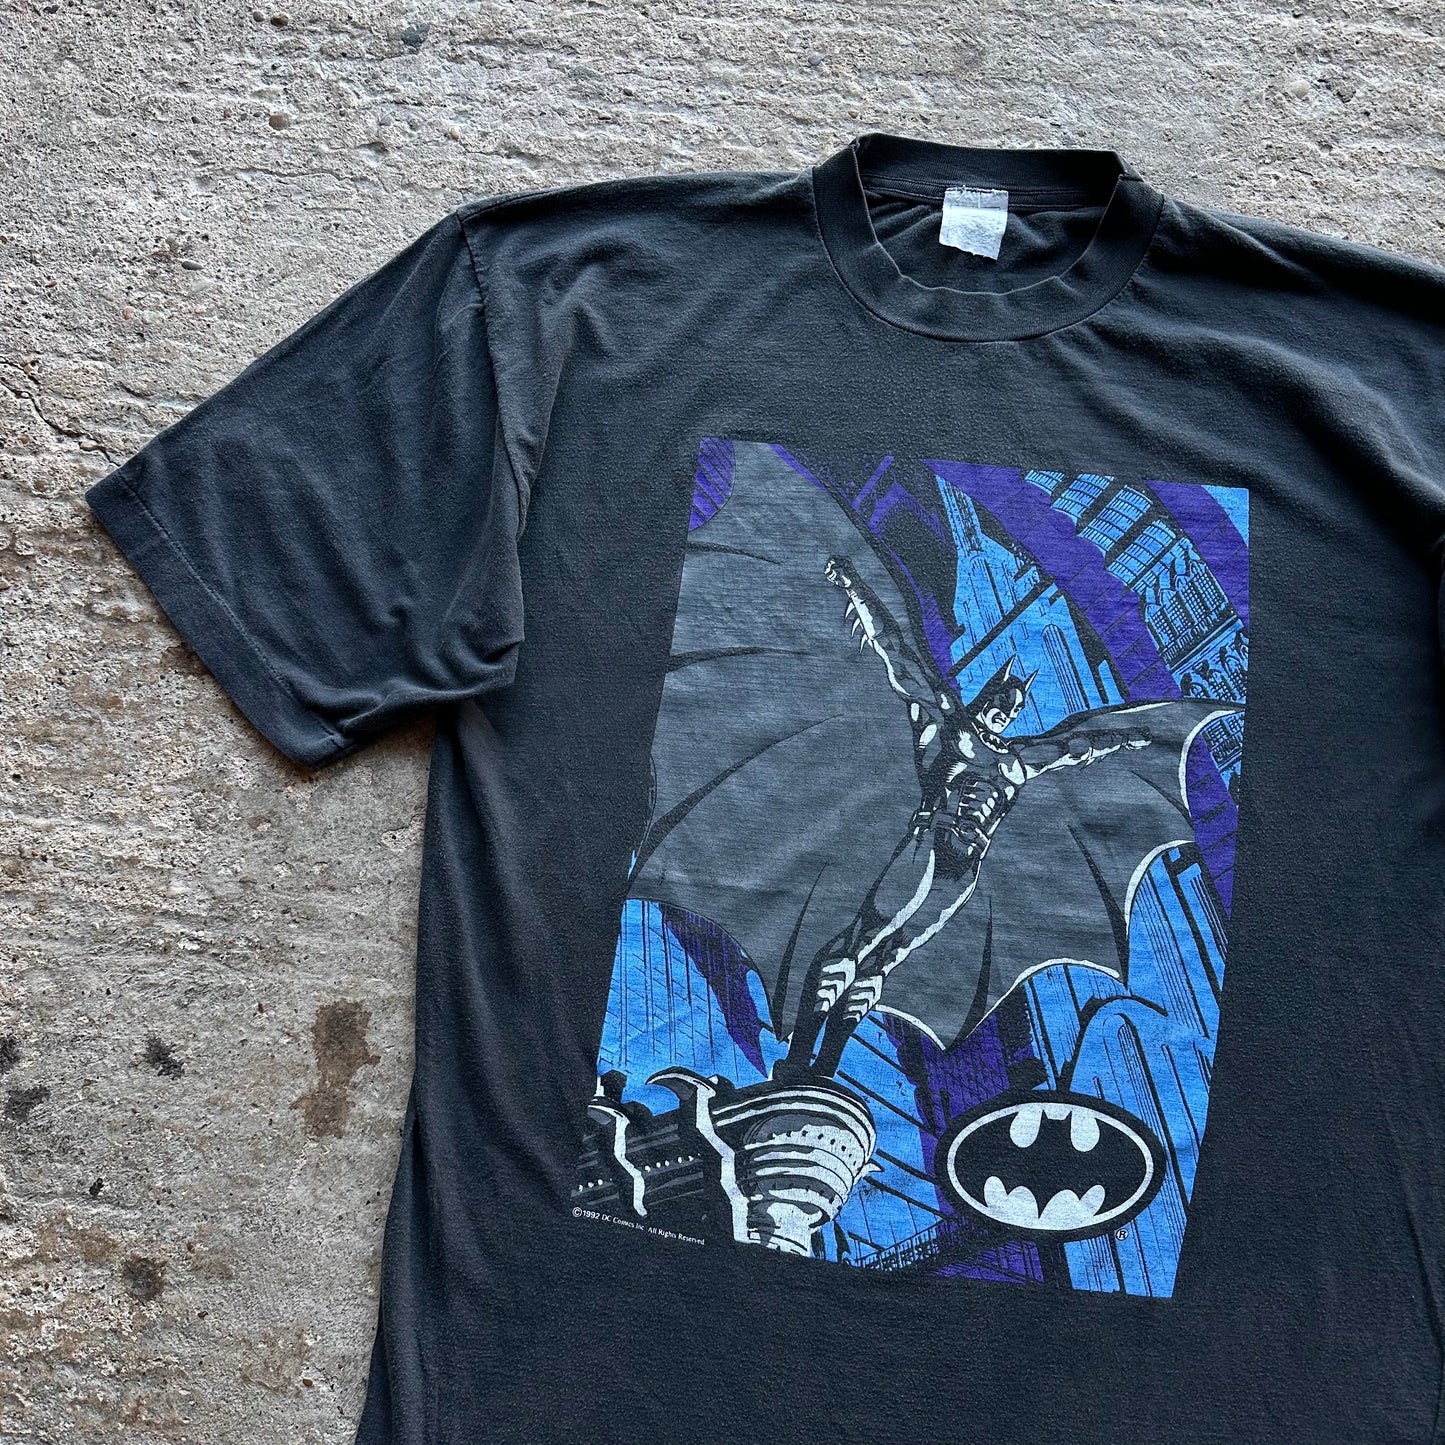 Batman - 'Gotham' - 1992 - L/XL